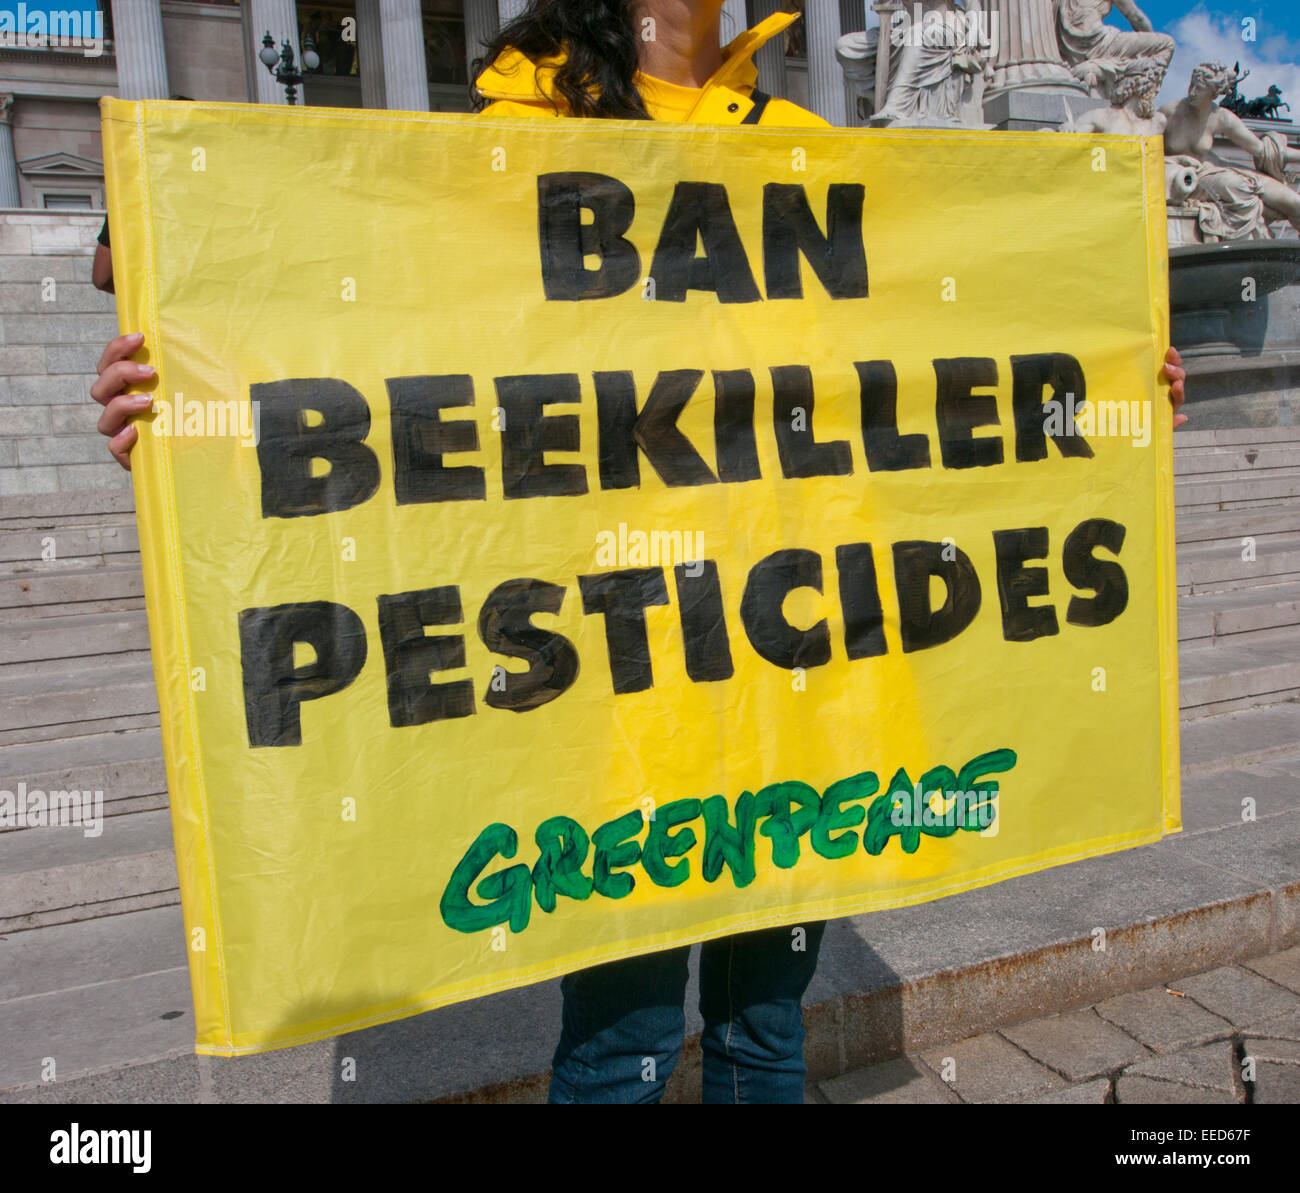 Ban Bee killer Pesticides, Greenpeace sign Stock Photo